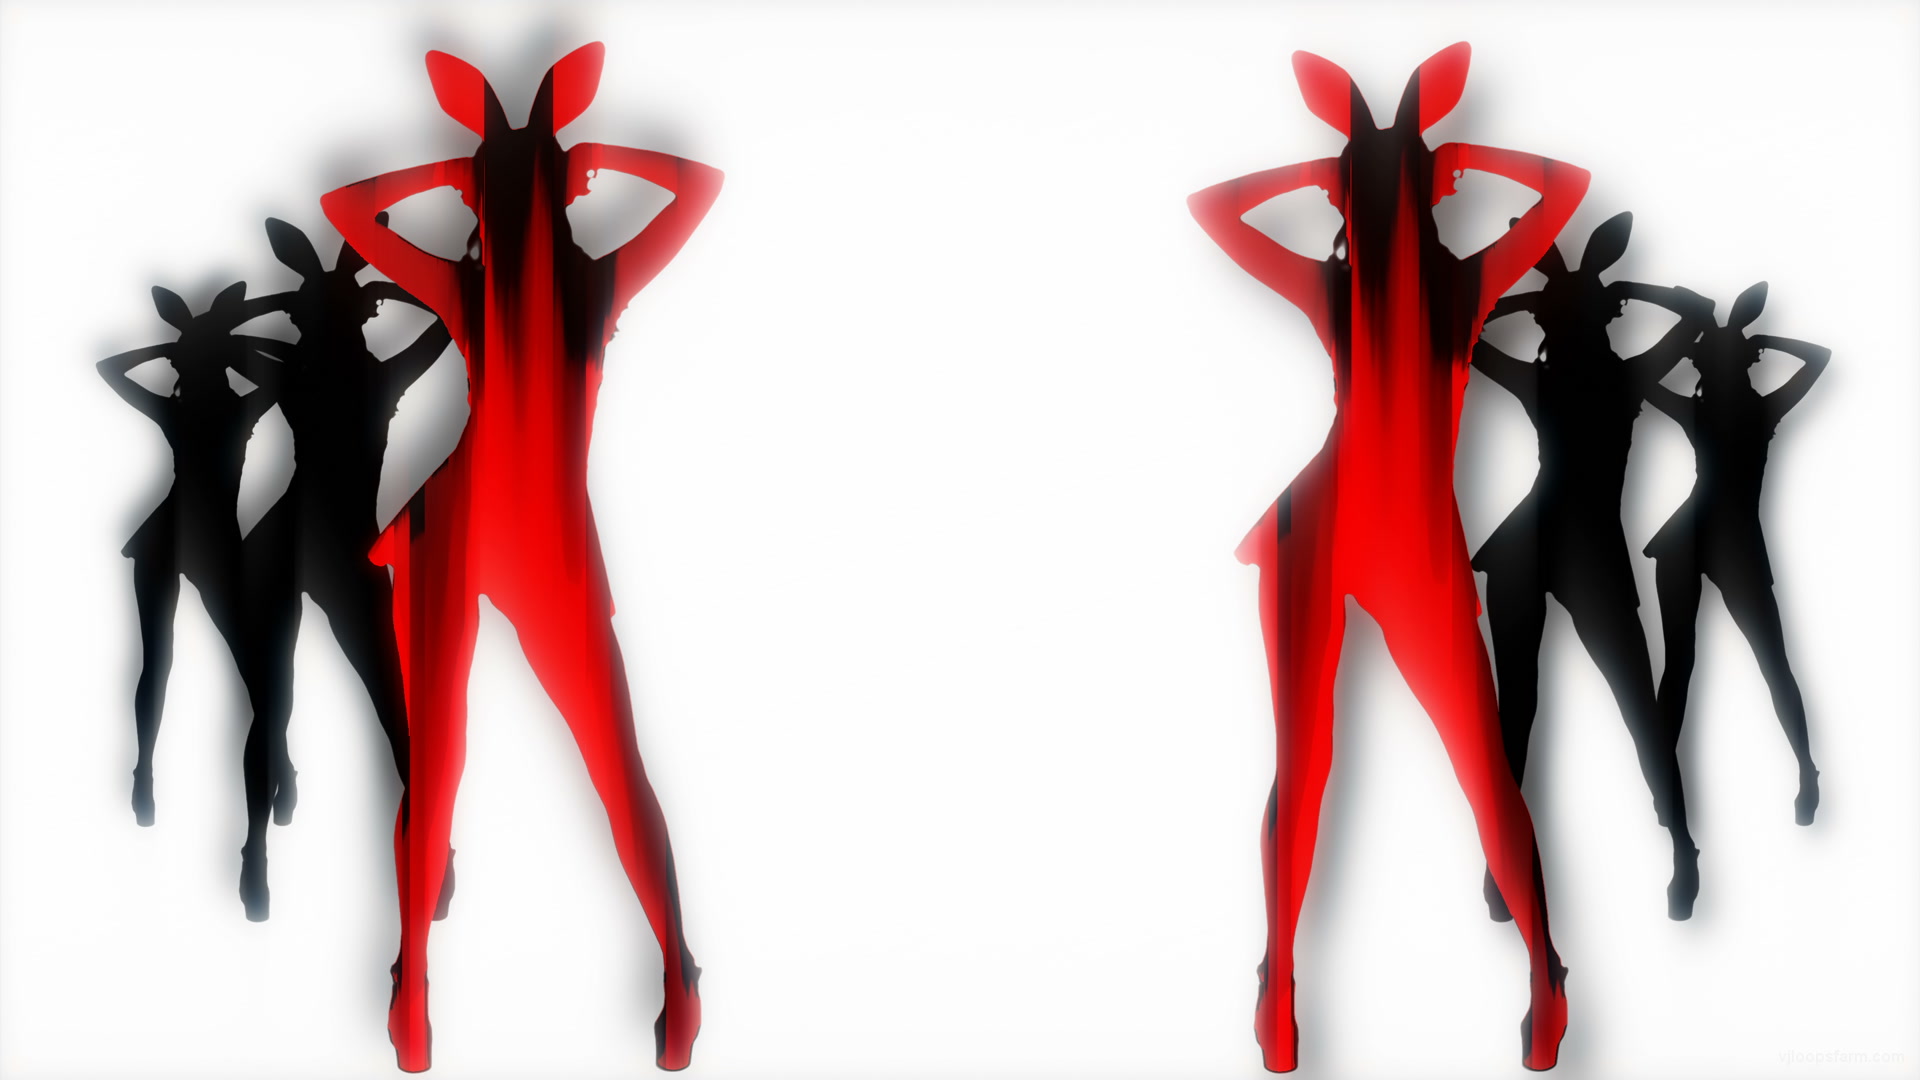 Red Strobe Bunny Girls Bodyguards Side Playboy Rabbit Dance 4K Video Art VJ Loop